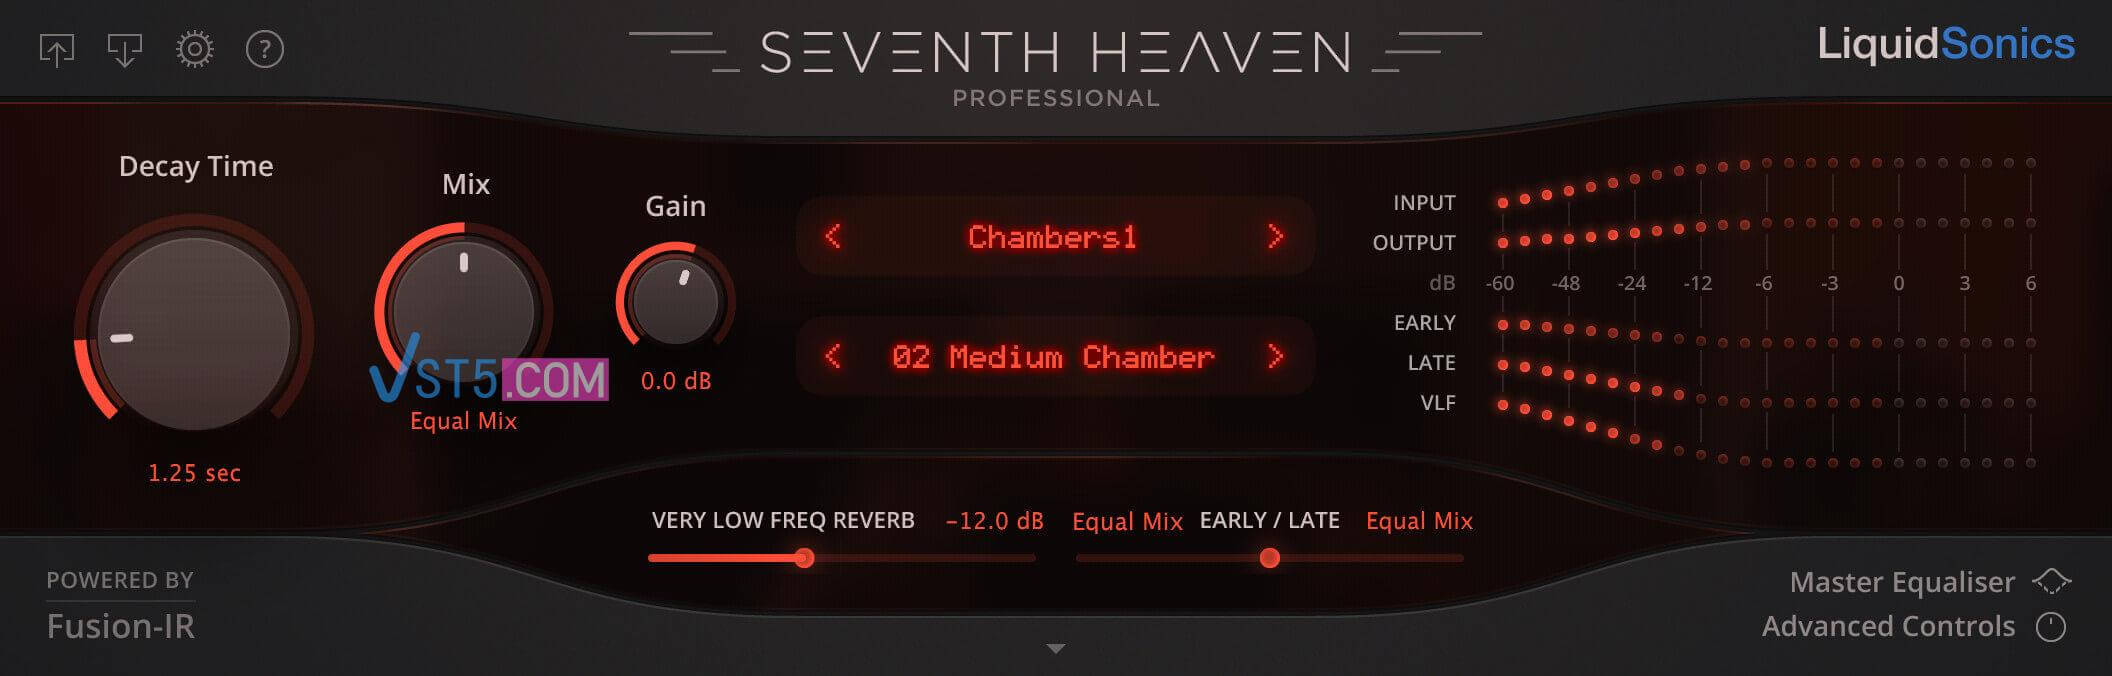 LiquidSonics Seventh Heaven Professional v1.3.3 READ NFO-R2R 第七天堂混响专业版 包含采样文件8.88G)-VST5-娱乐音频资源分享平台